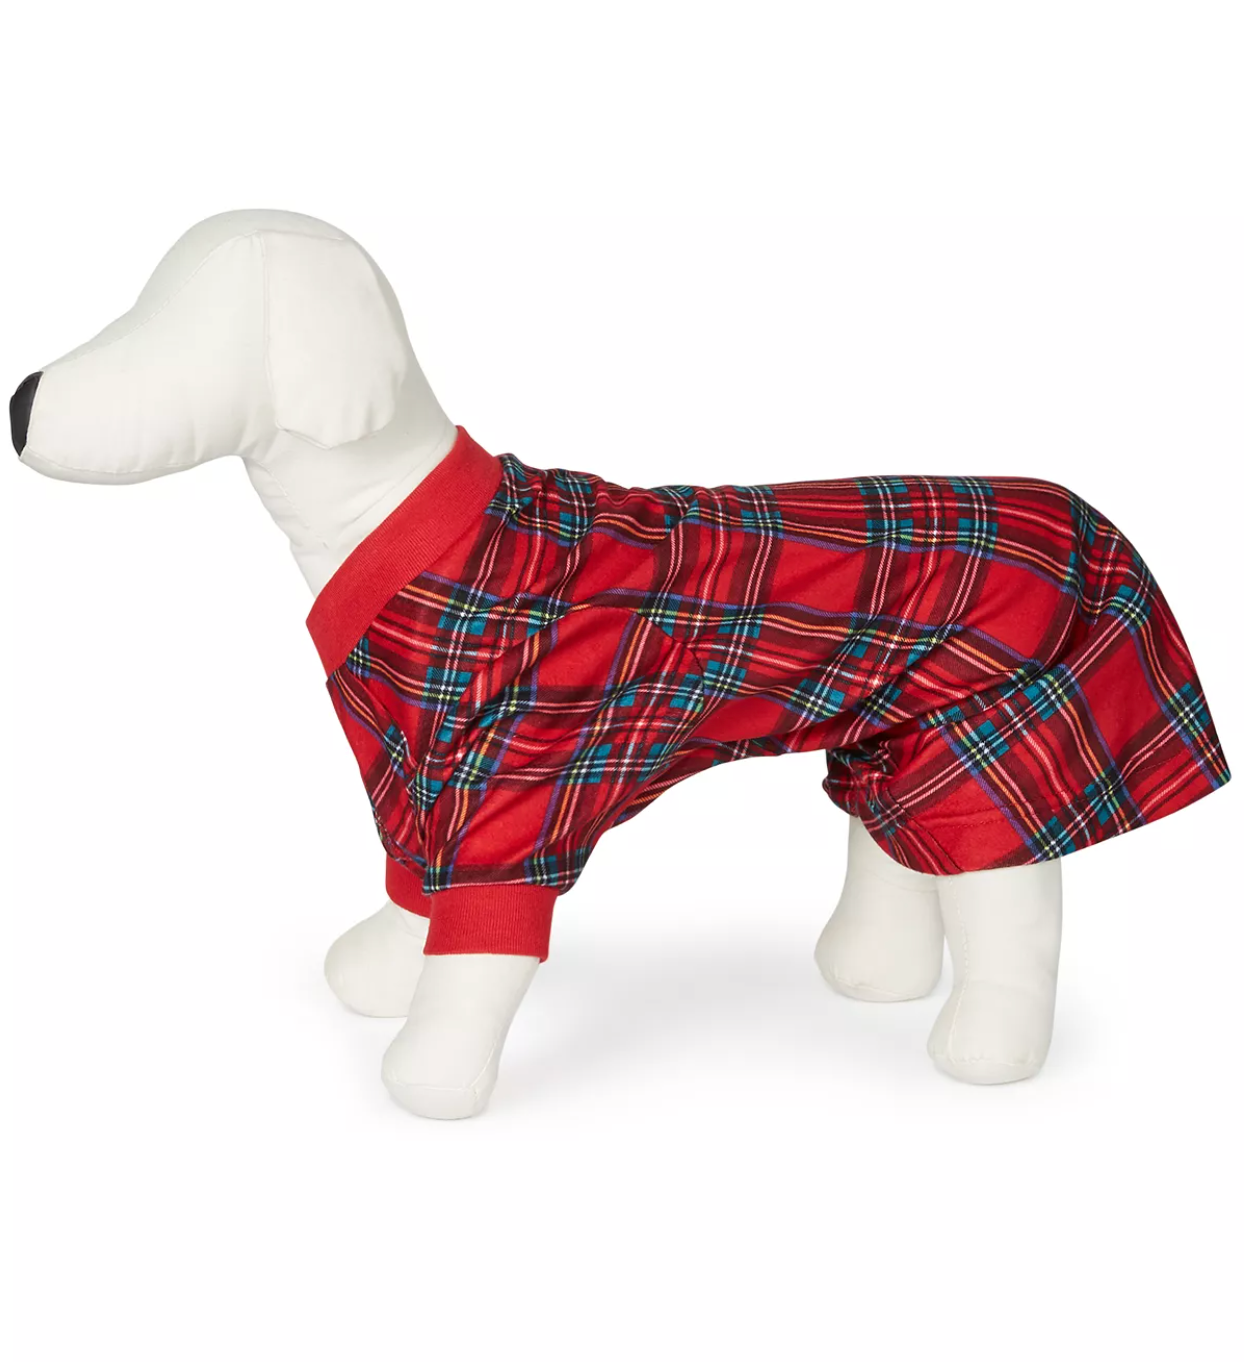 Primary image for allbrand365 designer Pet Matching Brinkley Plaid Pajamas Size Medium Color Red